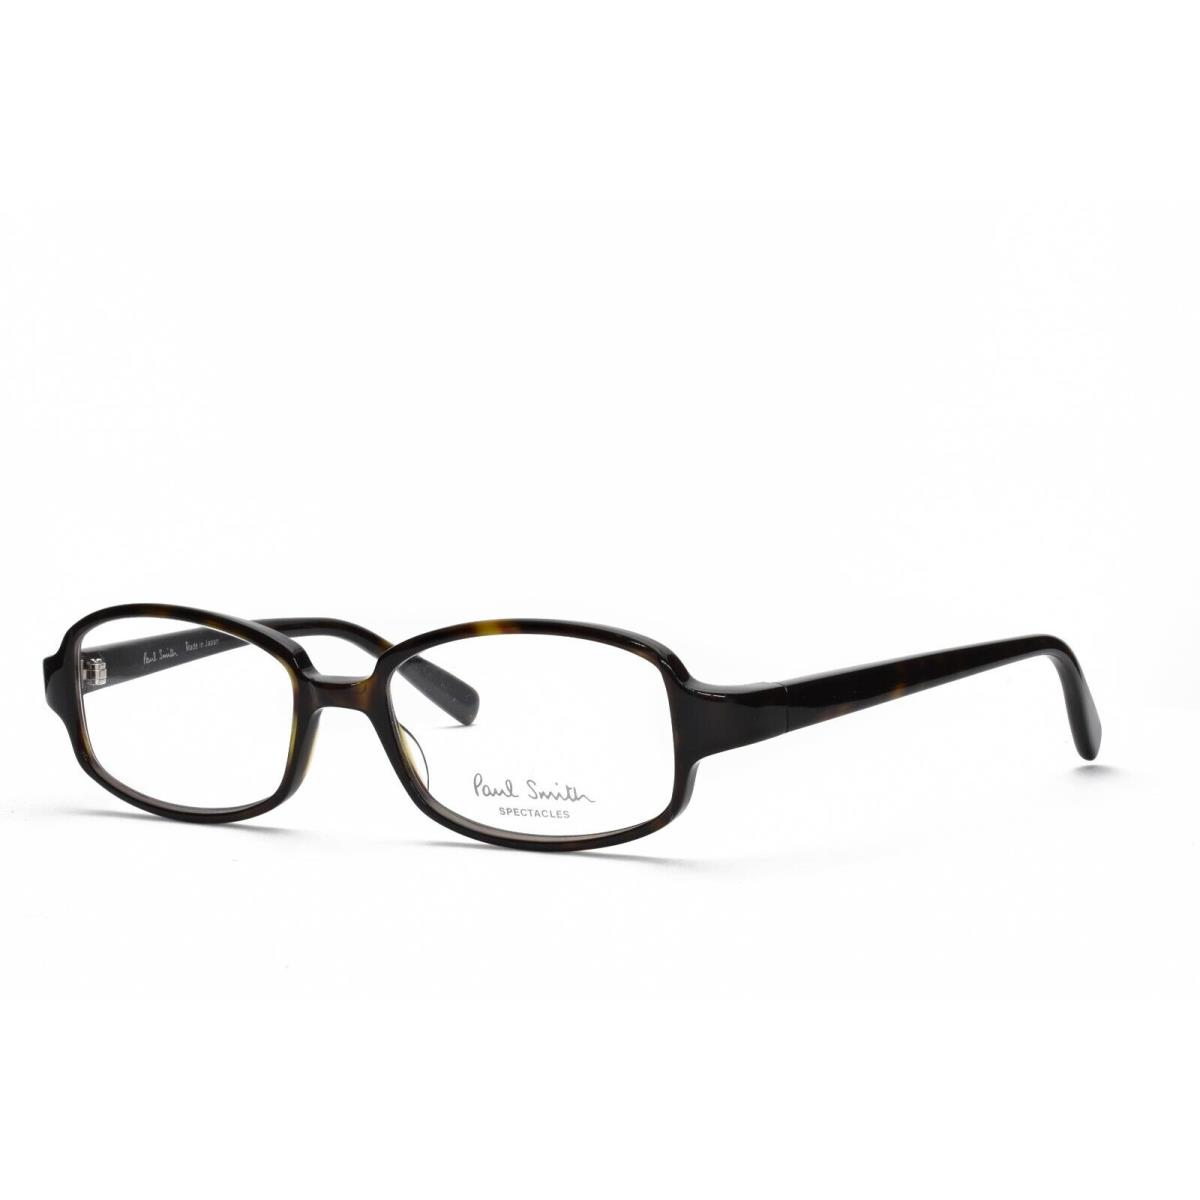 Paul Smith PS 421 OA Eyeglasses Frames Only 49-16-135